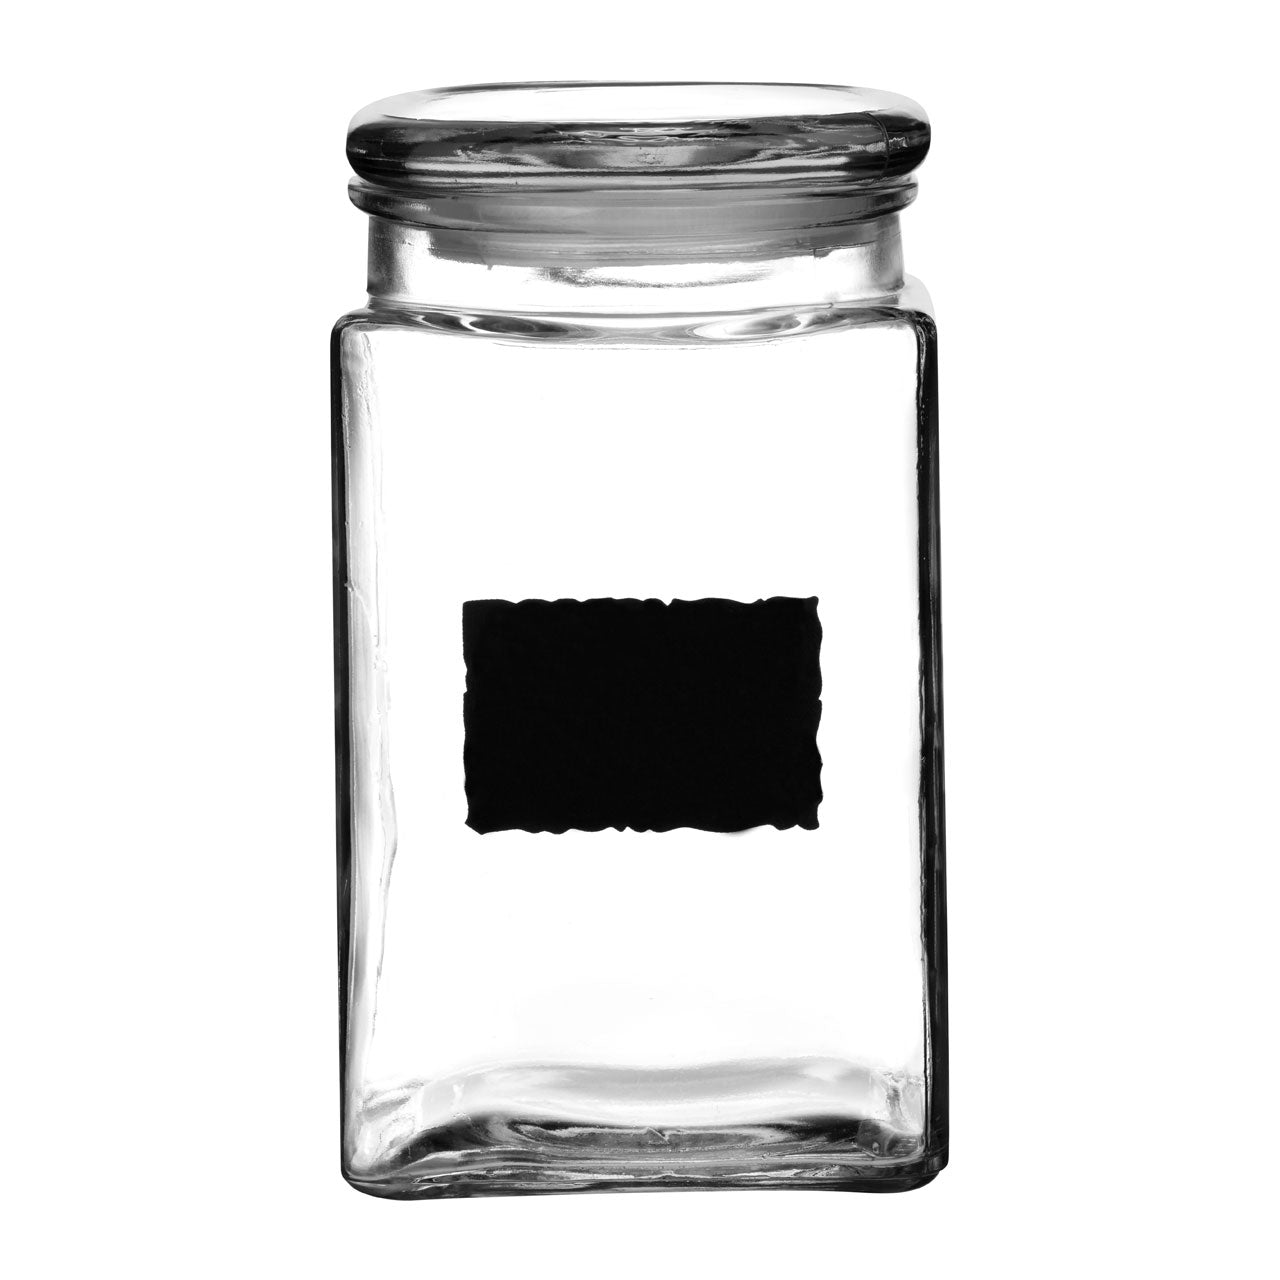 1.2 Litre Glass Storage Jars Airtight Lid With Chalkboard